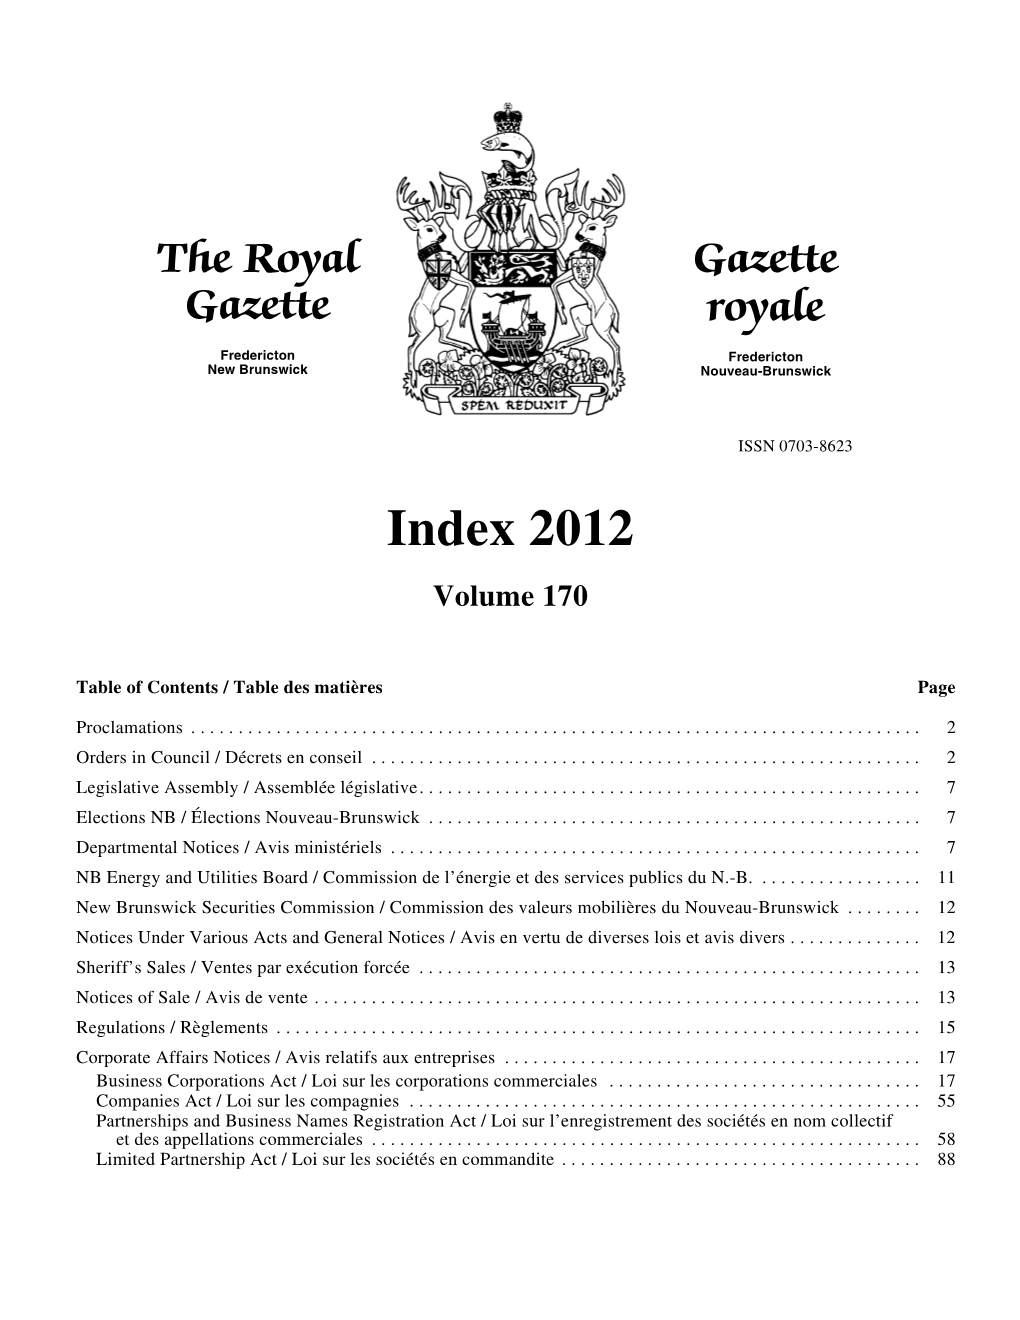 The Royal Gazette Index 2012